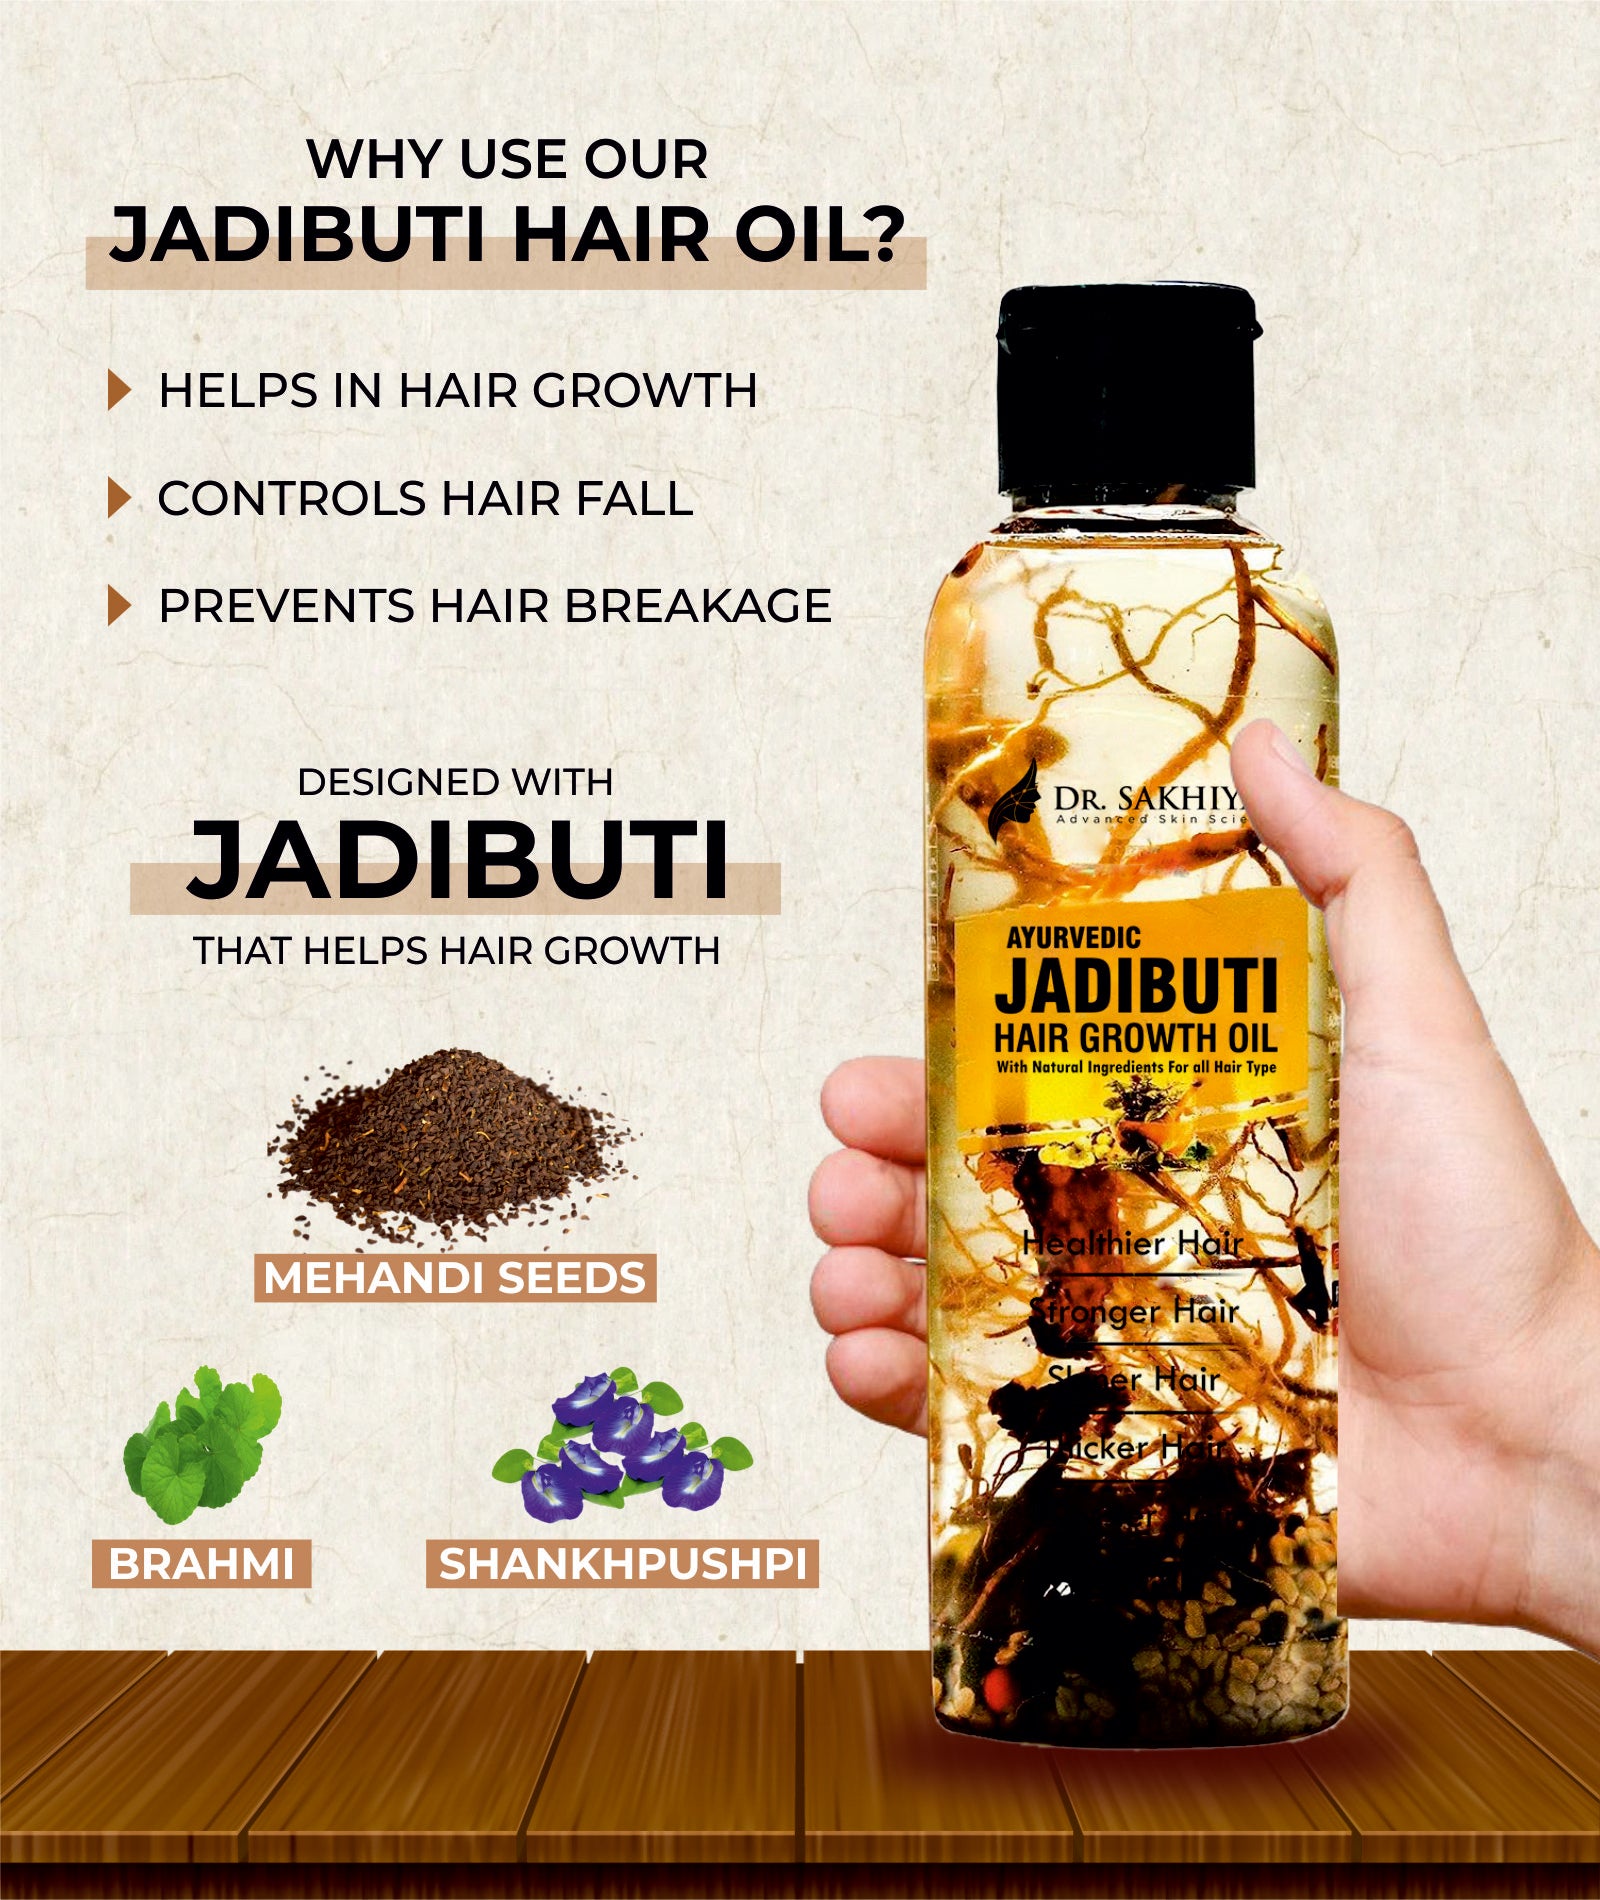 Ayurvedic Jadibuti hair Oil- Hair Growth, Controls Hair fall, Prevents Hair Breakage 